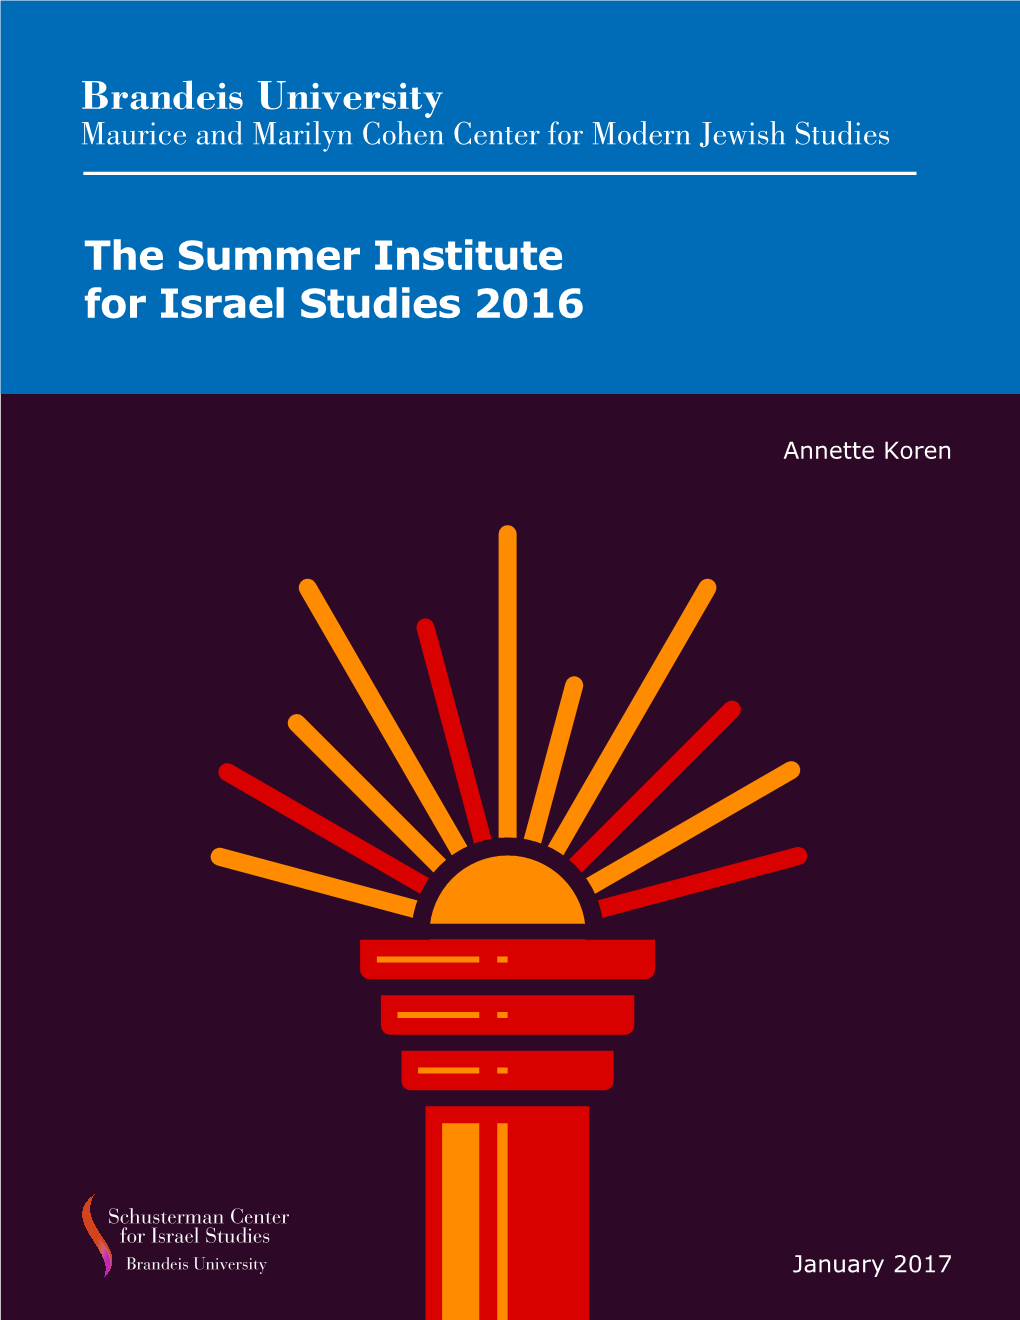 The Summer Institute for Israel Studies 2016